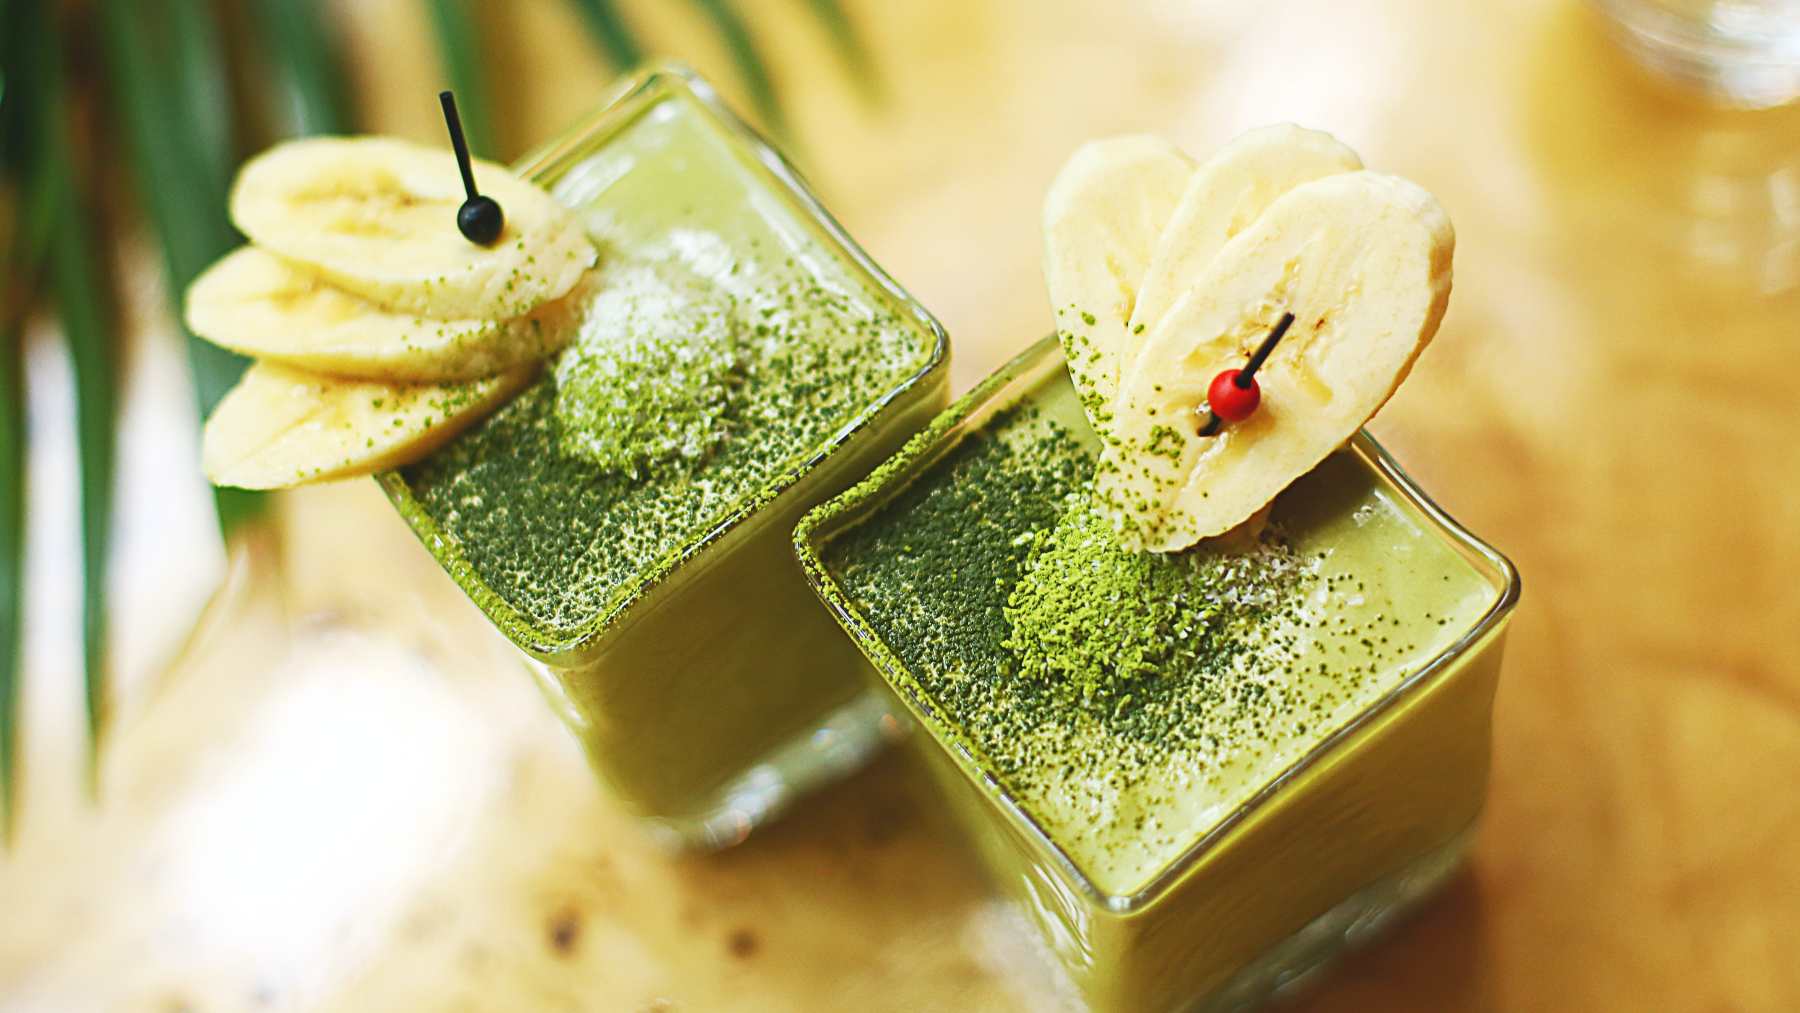 Té Matcha para cocinar - Batidos y postres con té verde en polvo